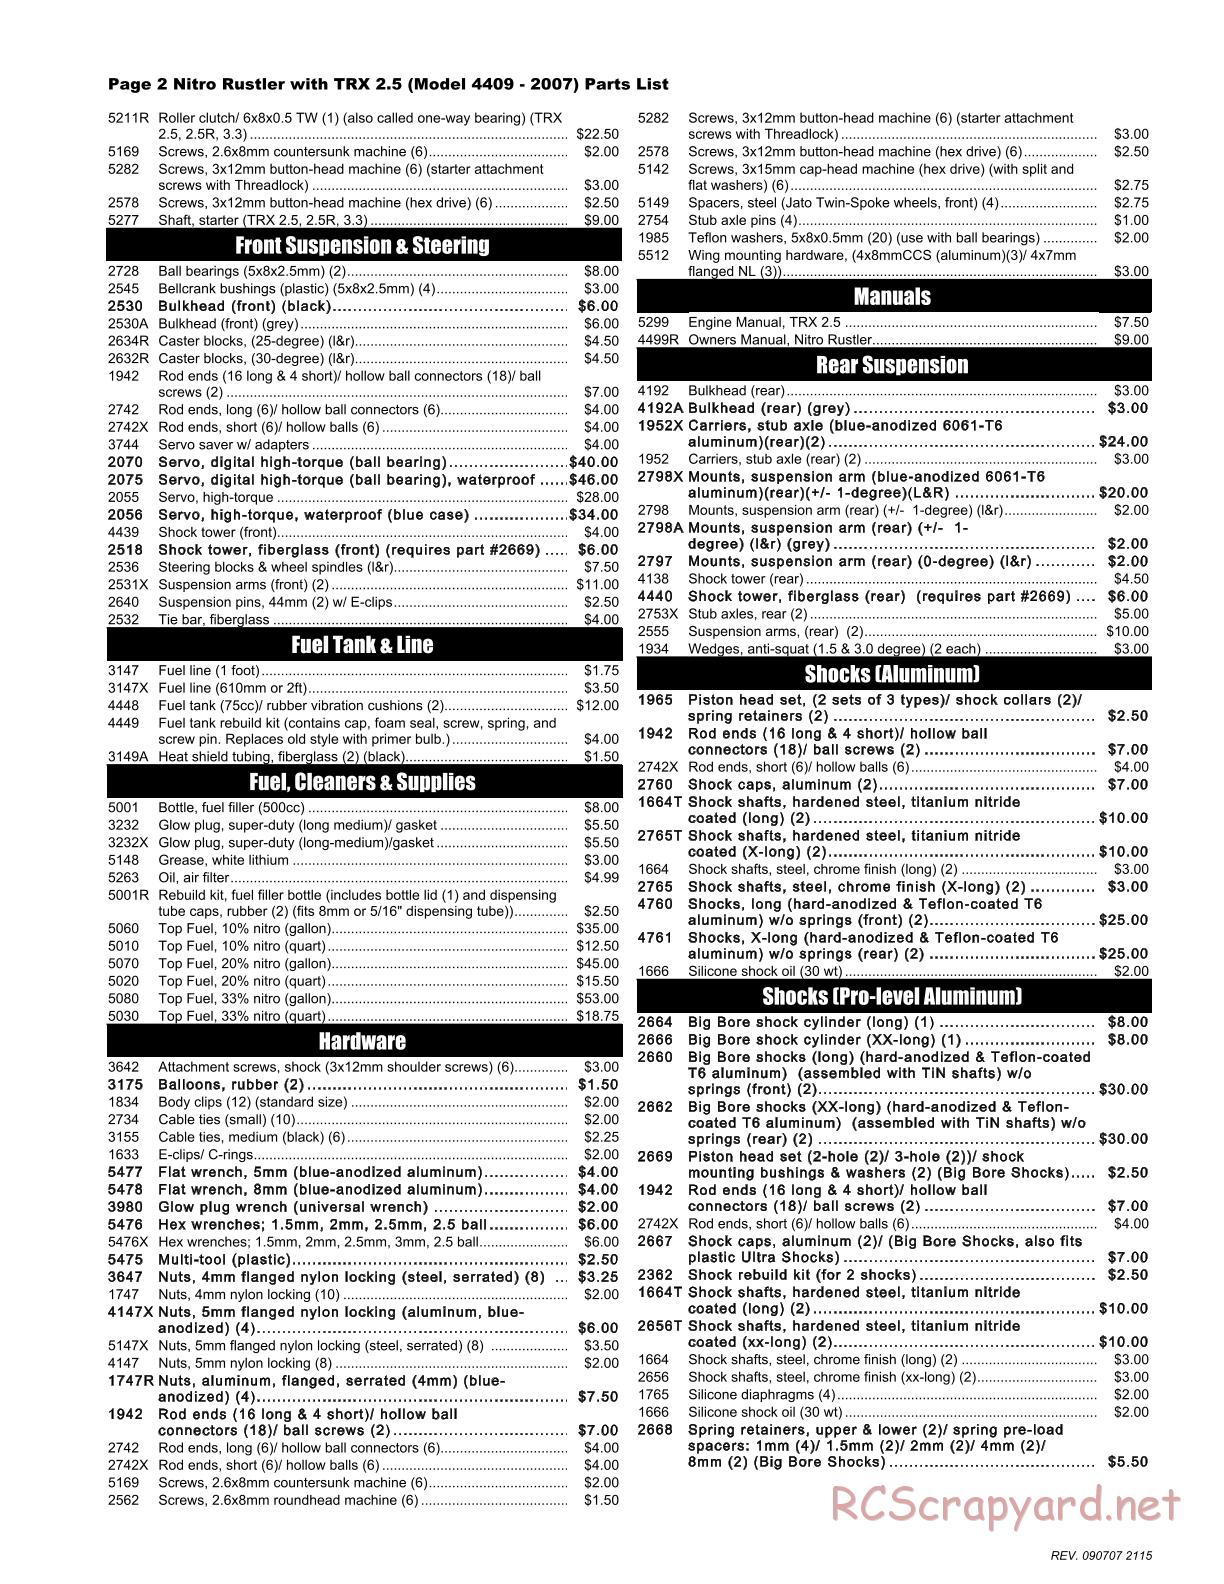 Traxxas - Nitro Rustler (2012) - Parts List - Page 2